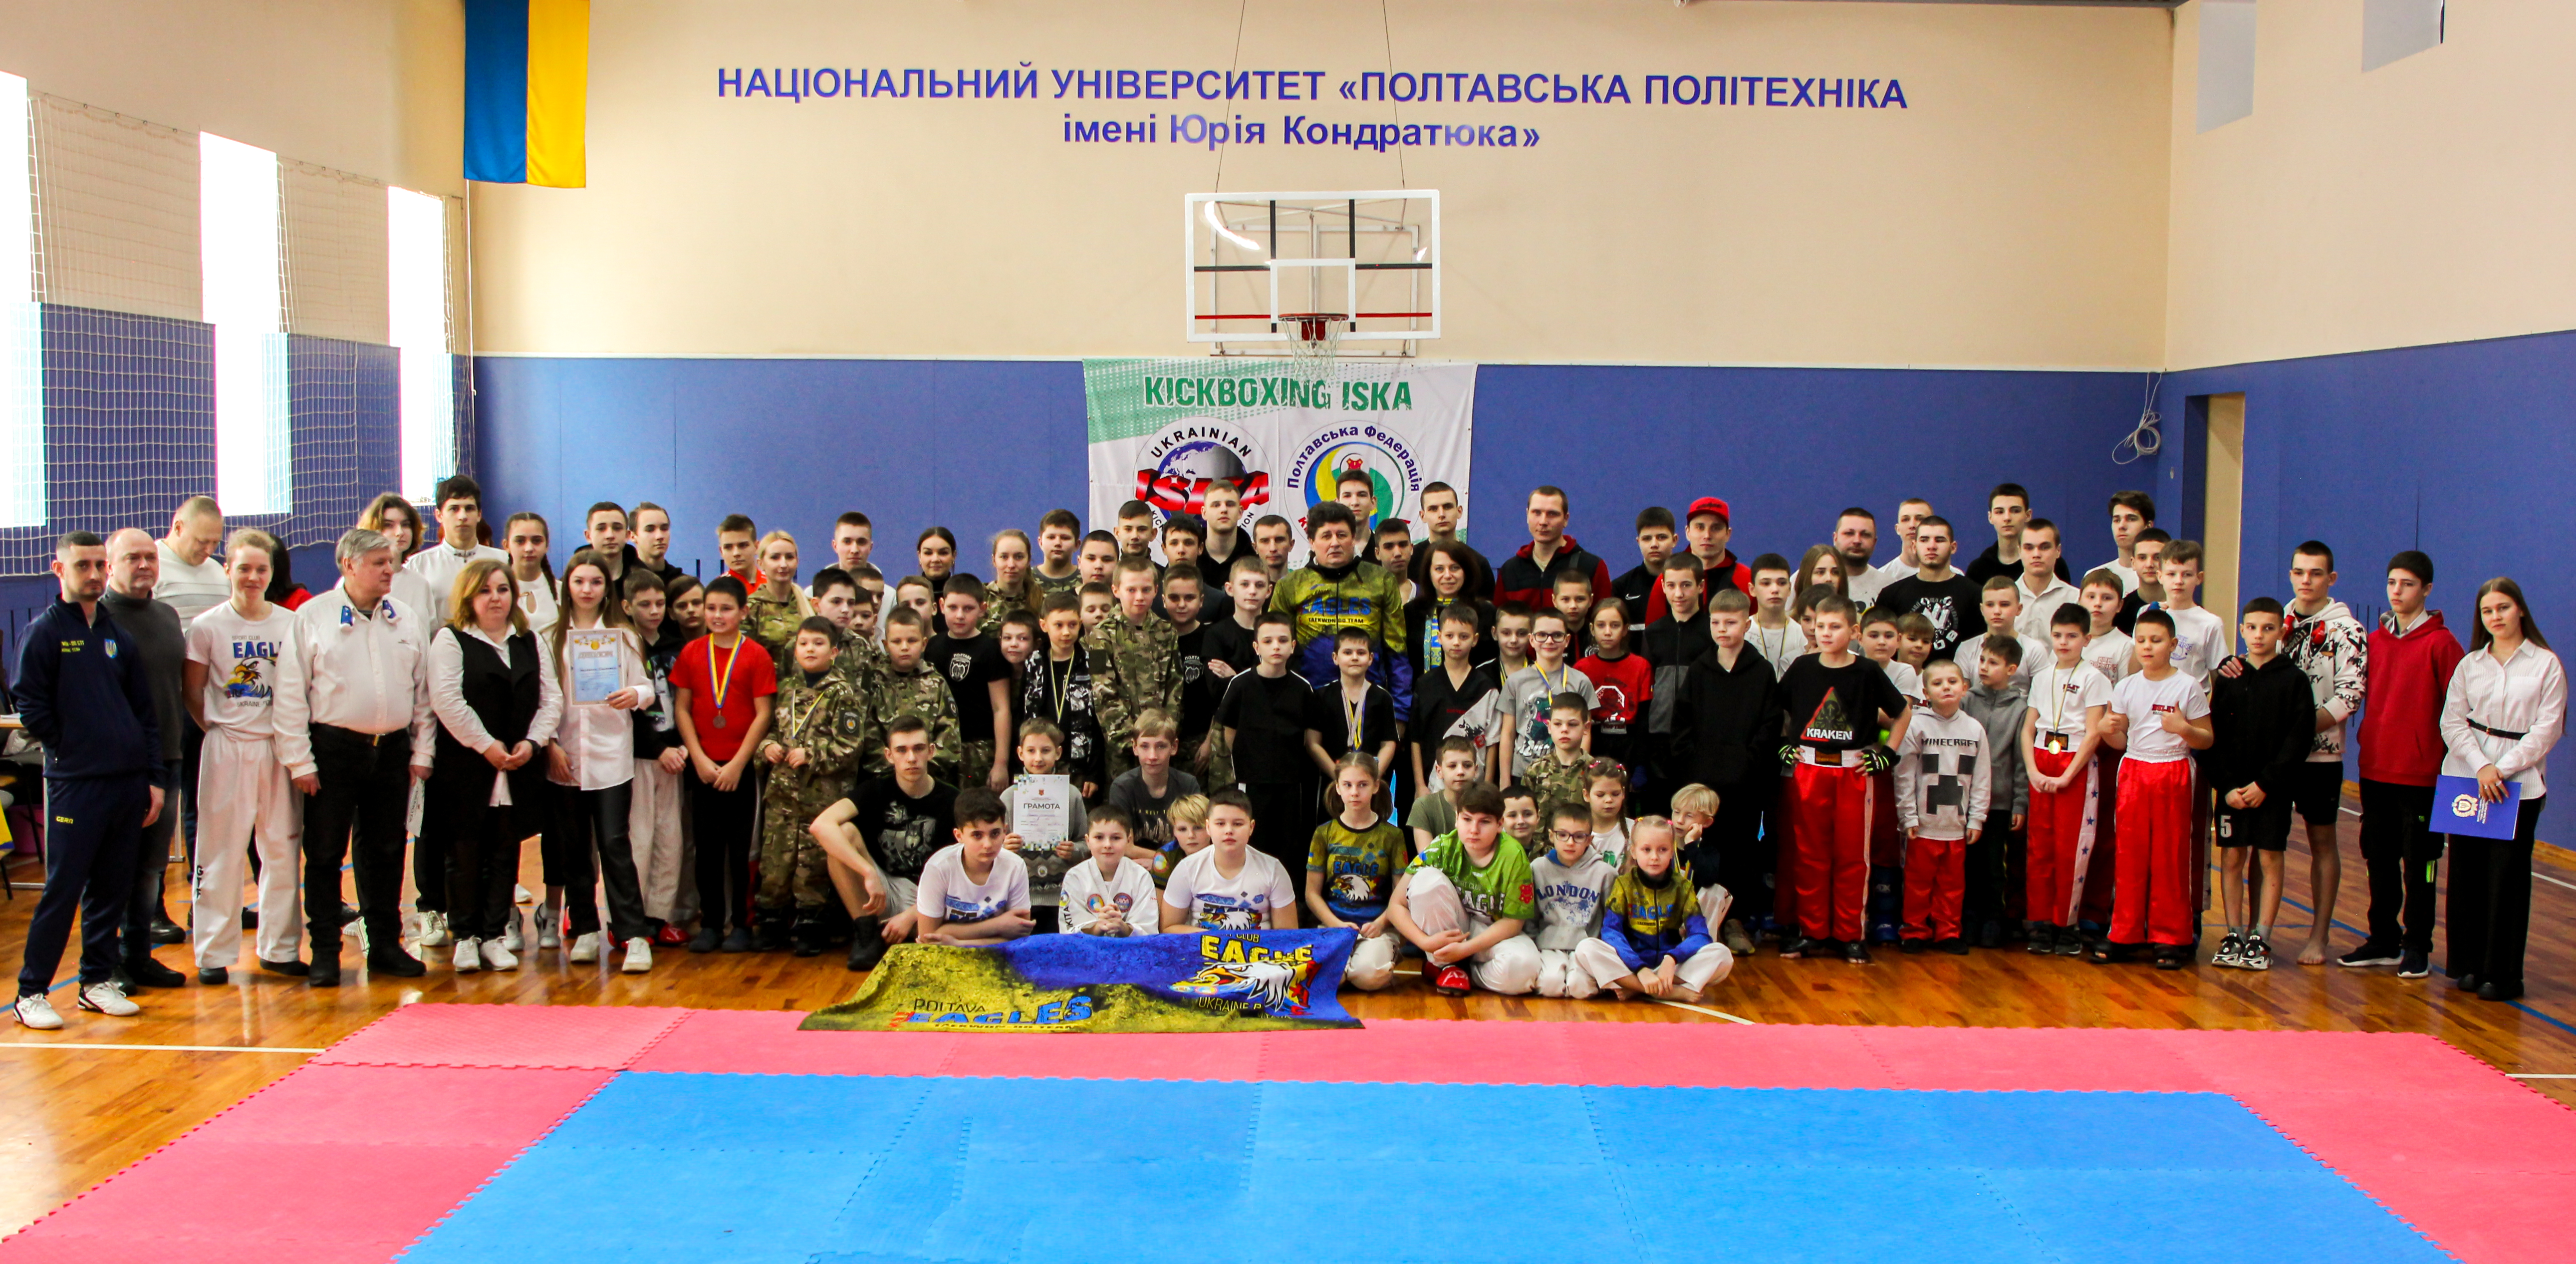 ISKA Poltava Kickboxing Cup “TATAMI STYLE IN POLTAVA” takes place at the Polytechnic